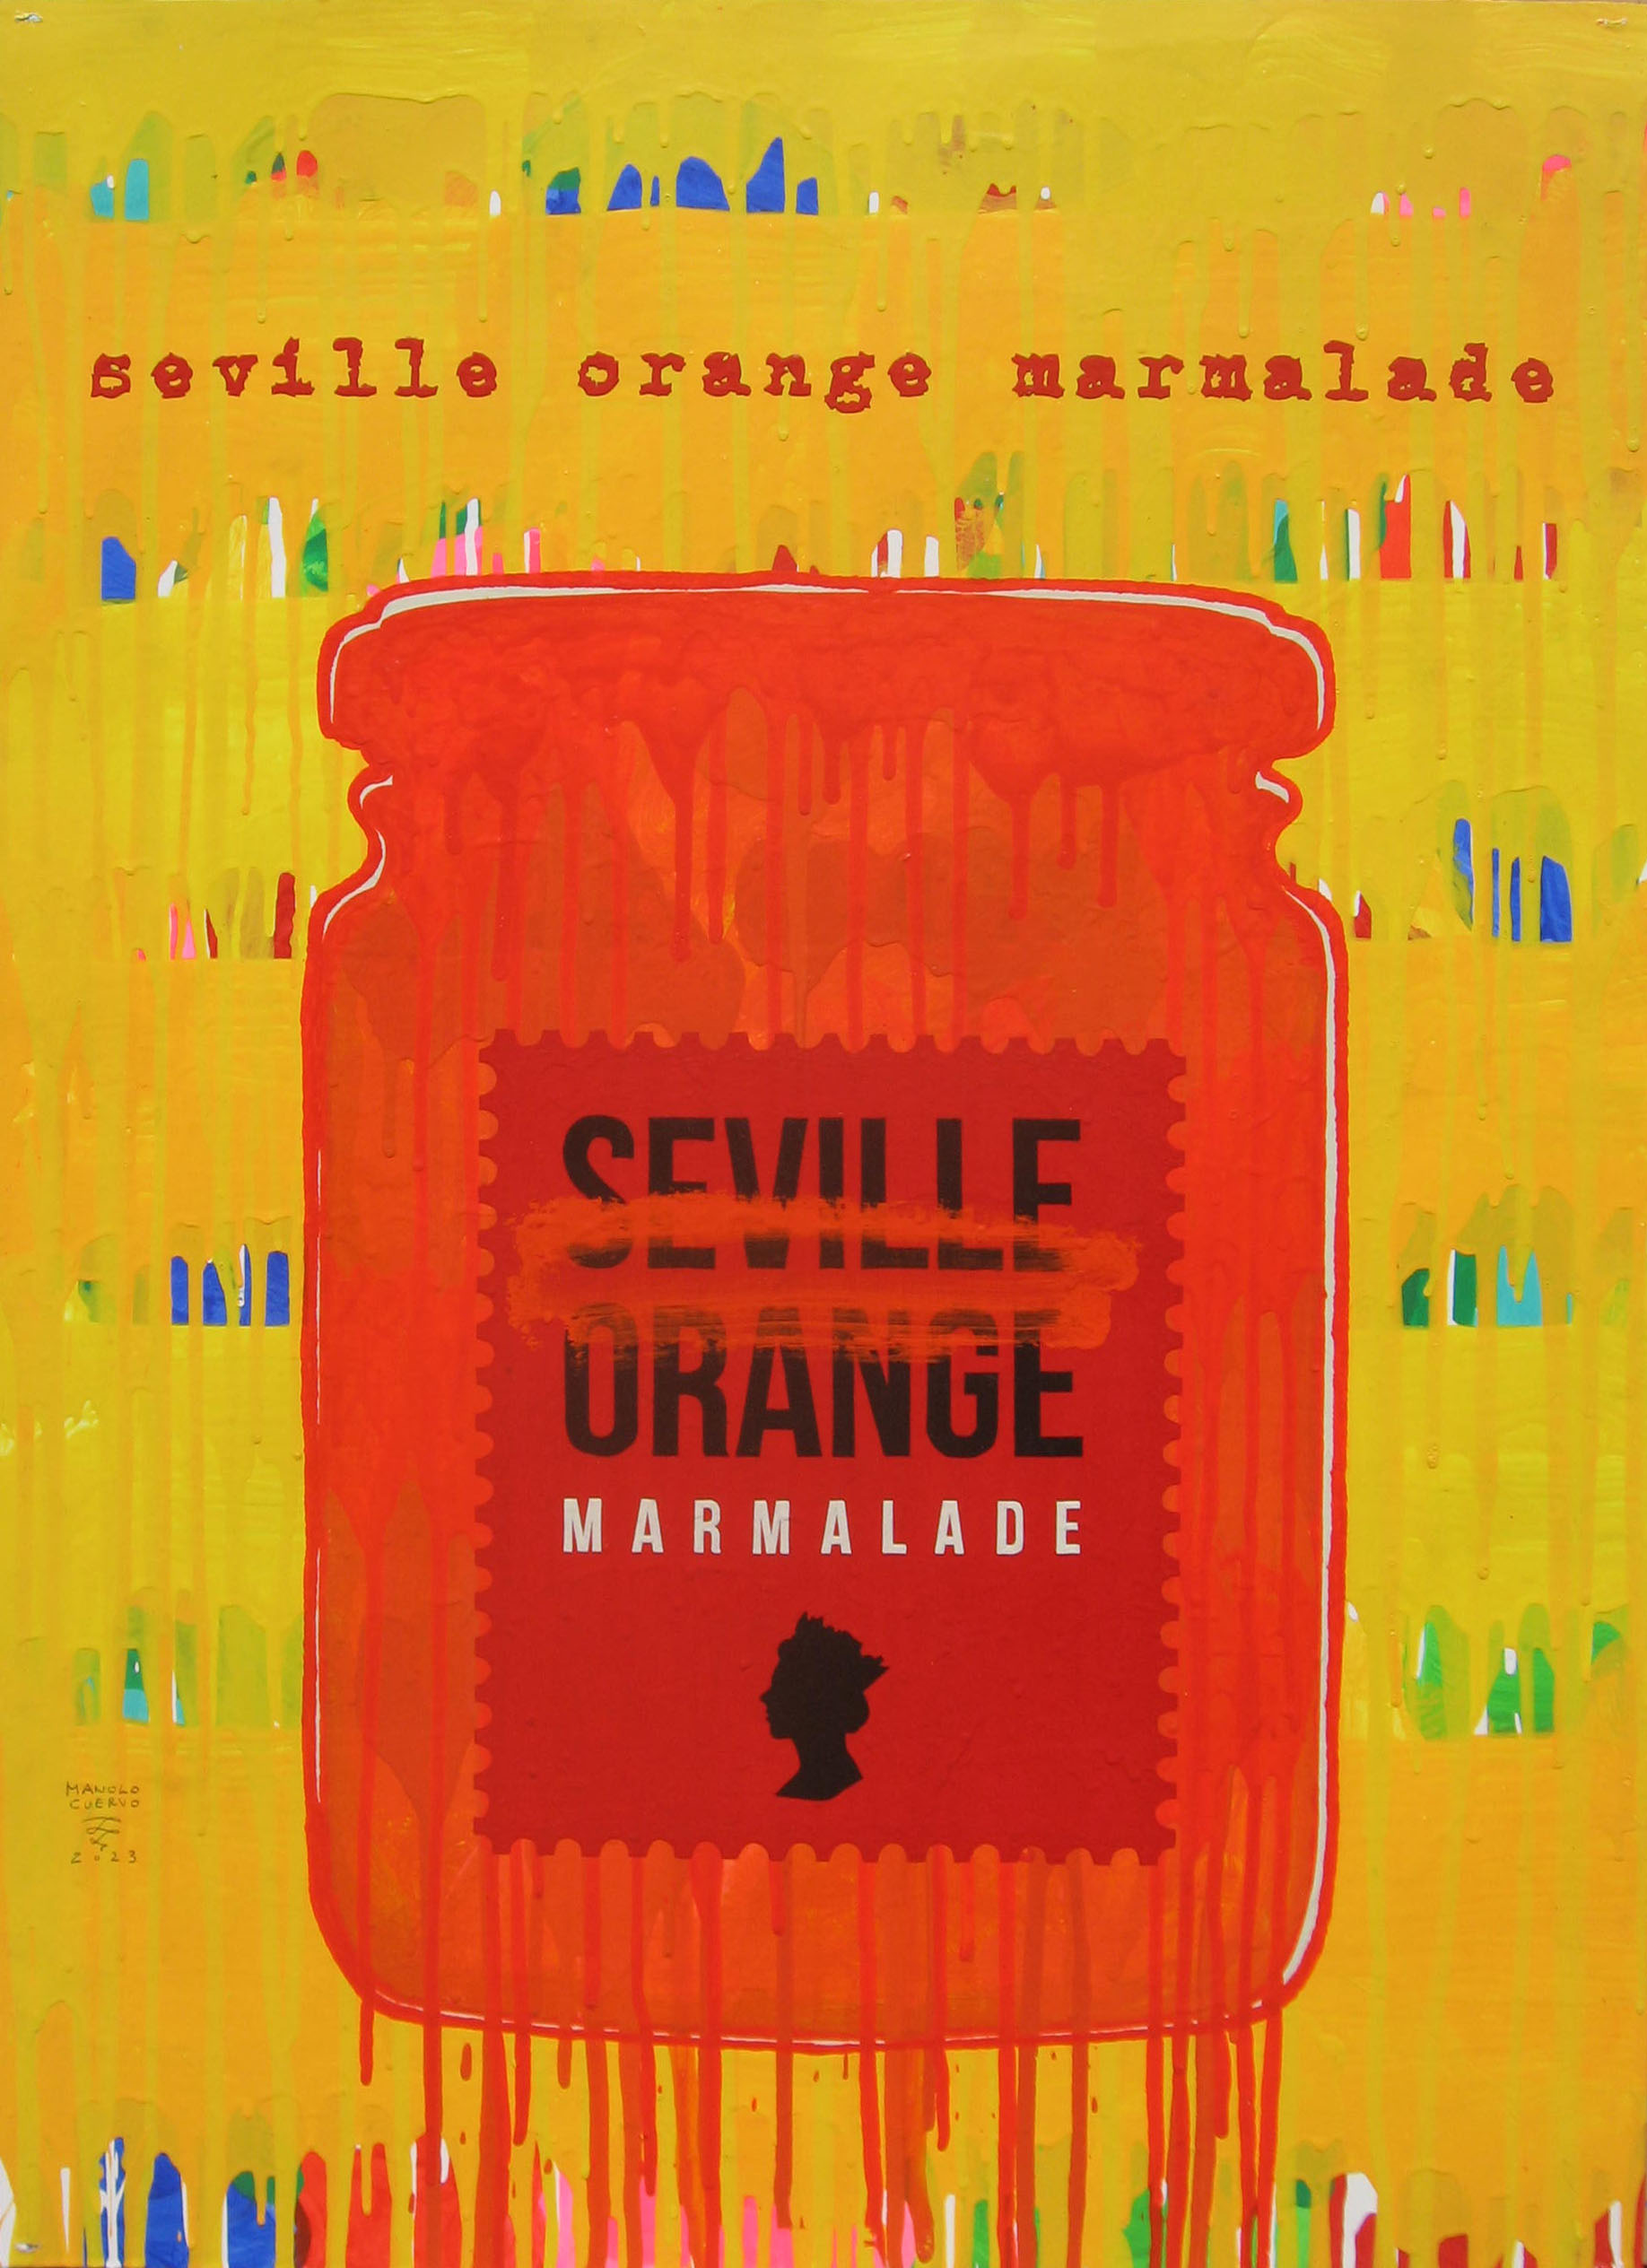 Seville Orange marmalade I